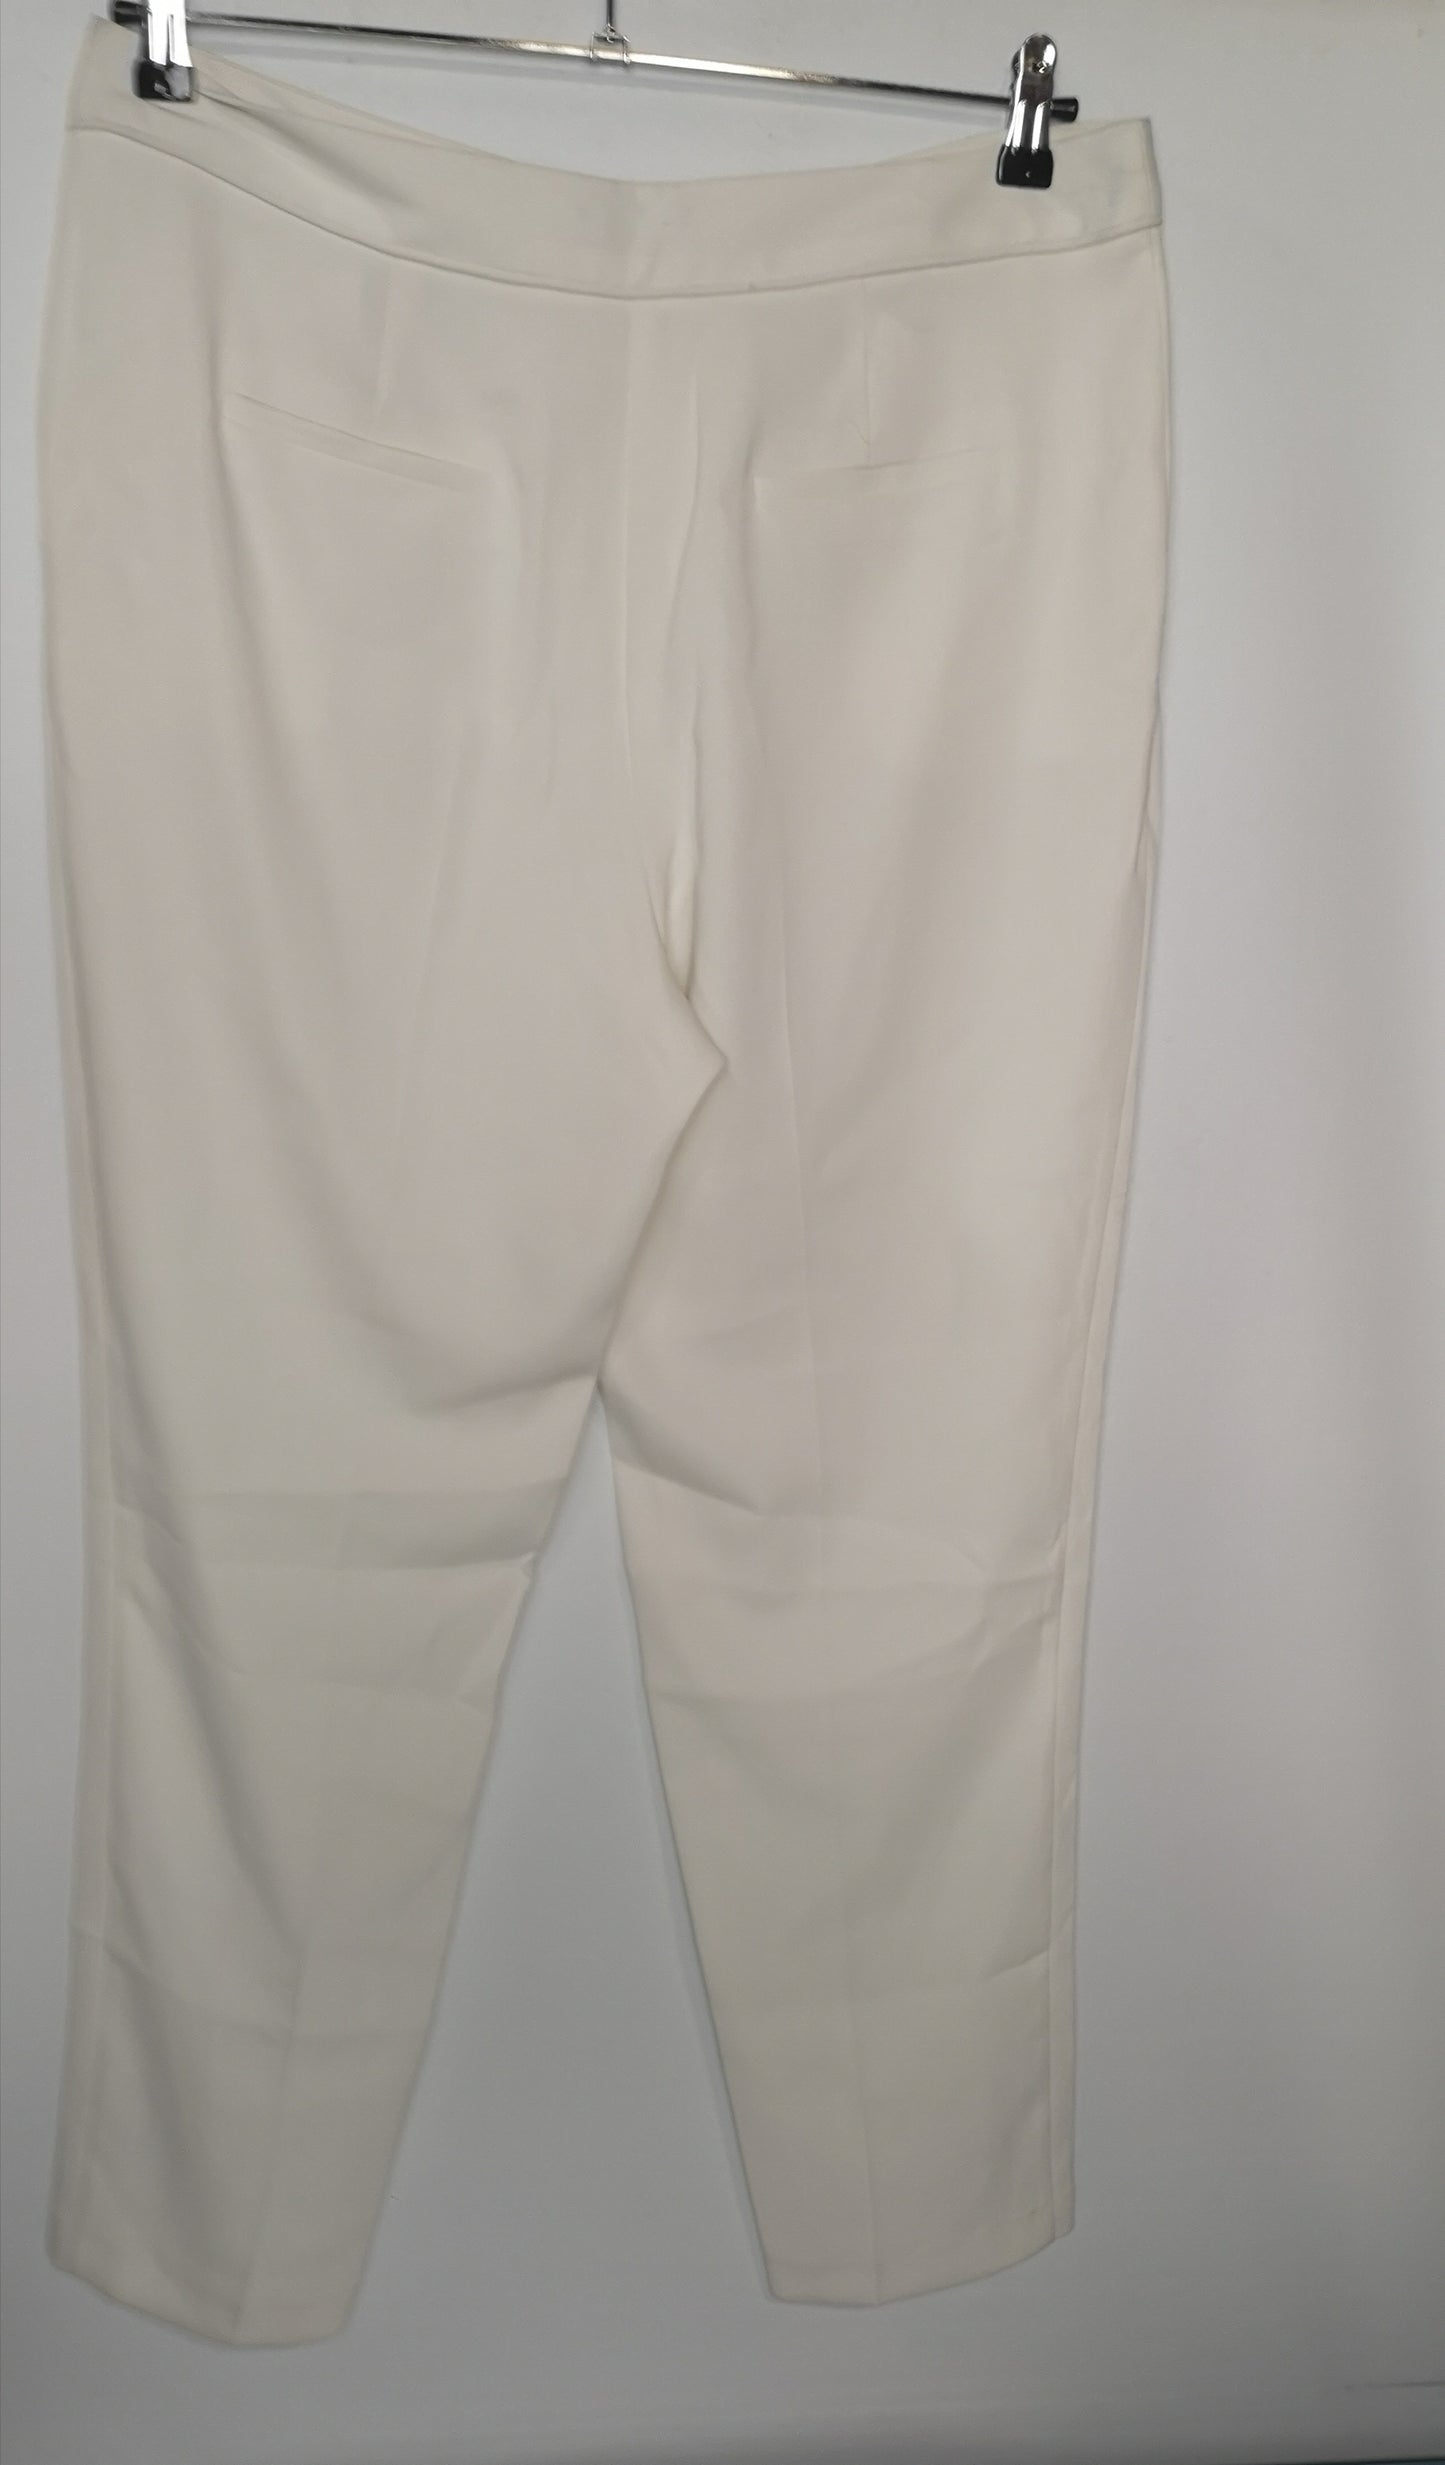 BNWT Wallis White Trousers Size 16